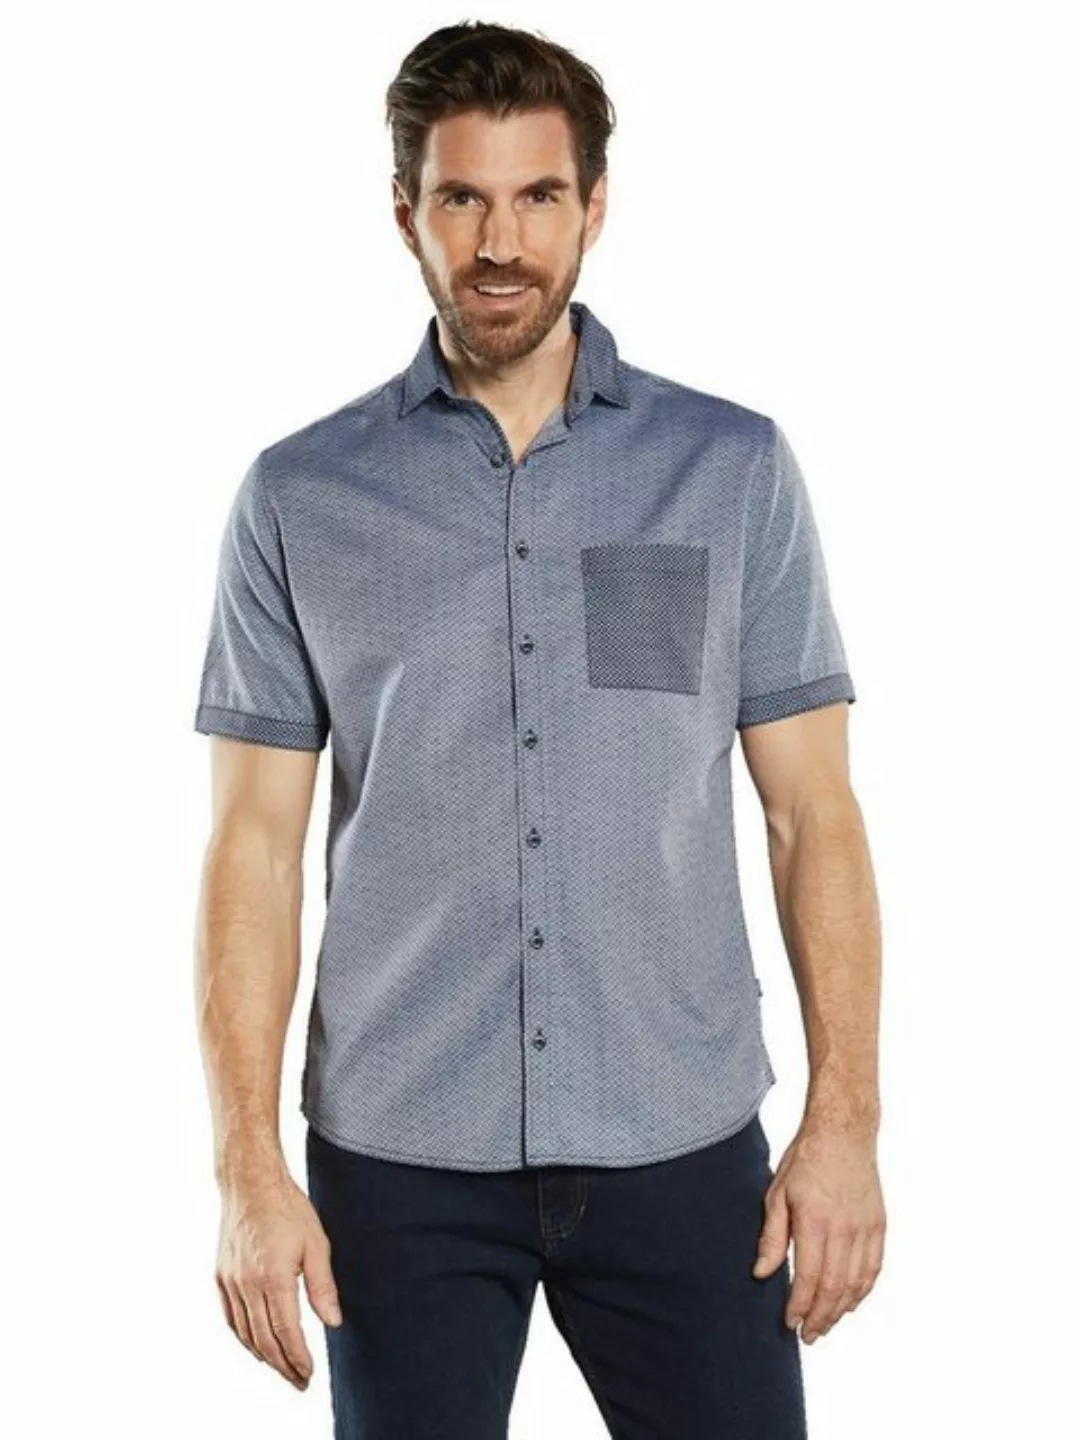 Engbers Kurzarmhemd Kurzarm-Hemd gemustert günstig online kaufen